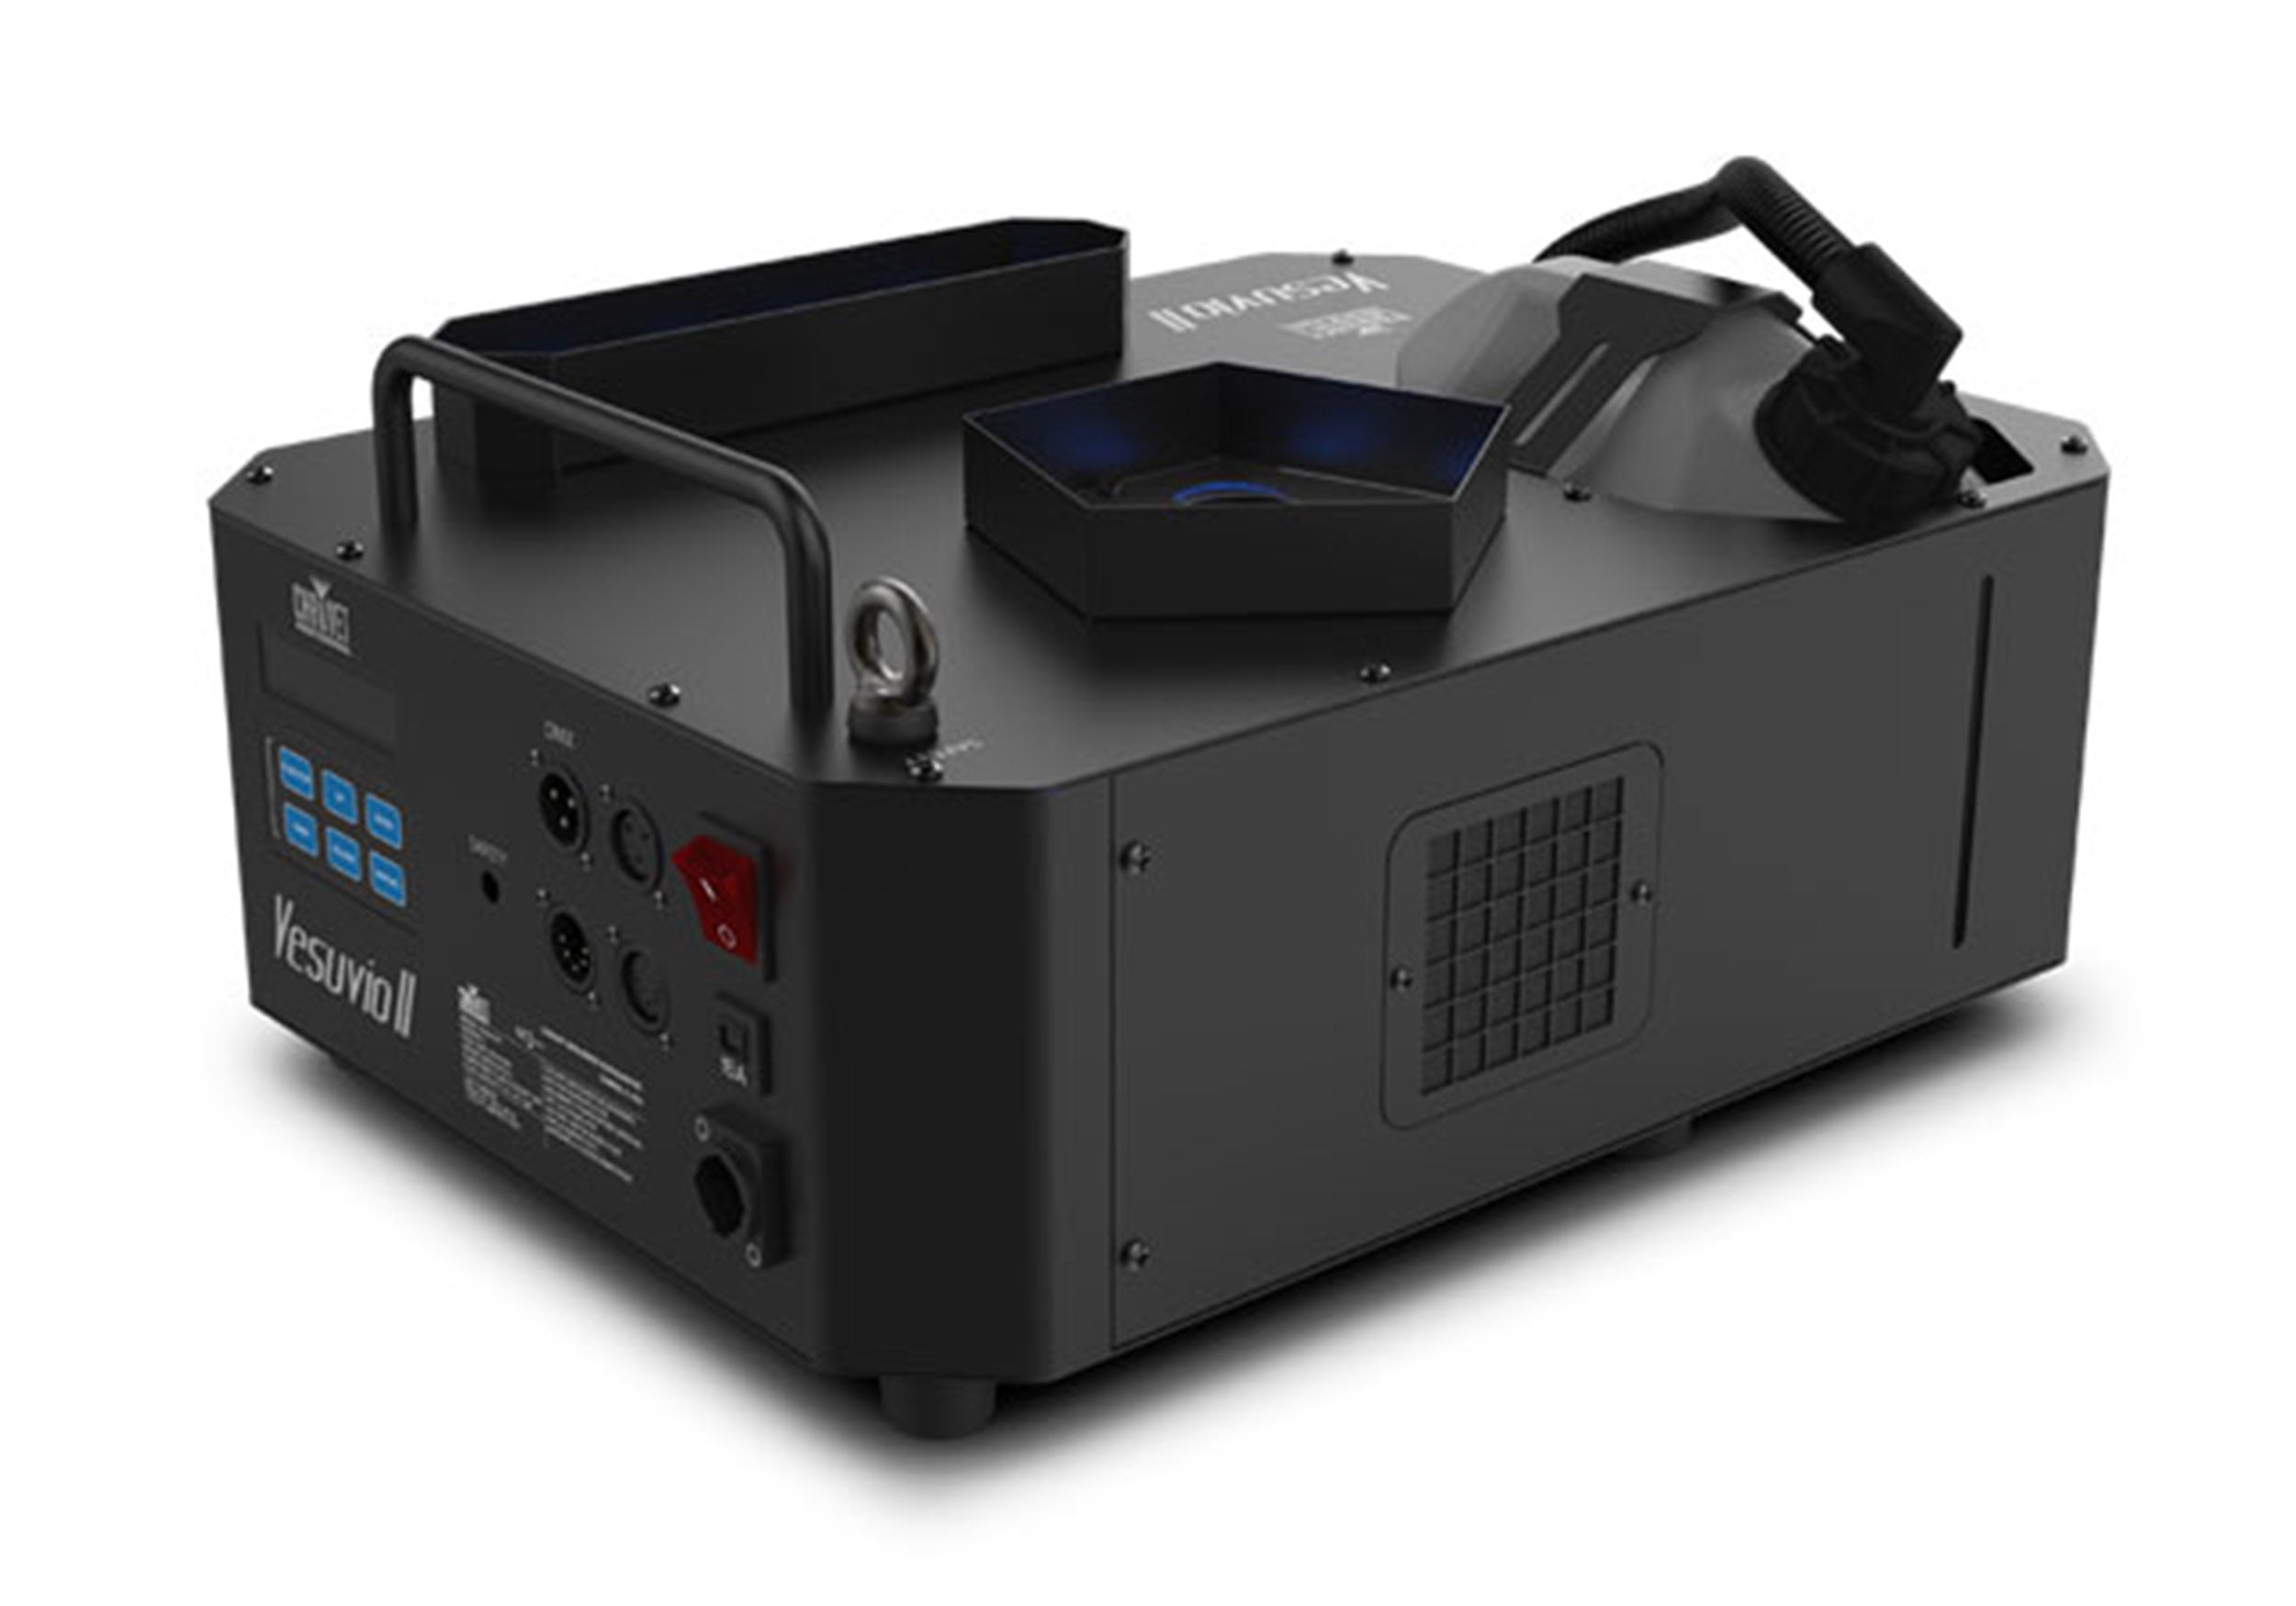 Chauvet Pro Vesuvio II RGBA+UV LED Illuminated Fog Machine - Hollywood DJ